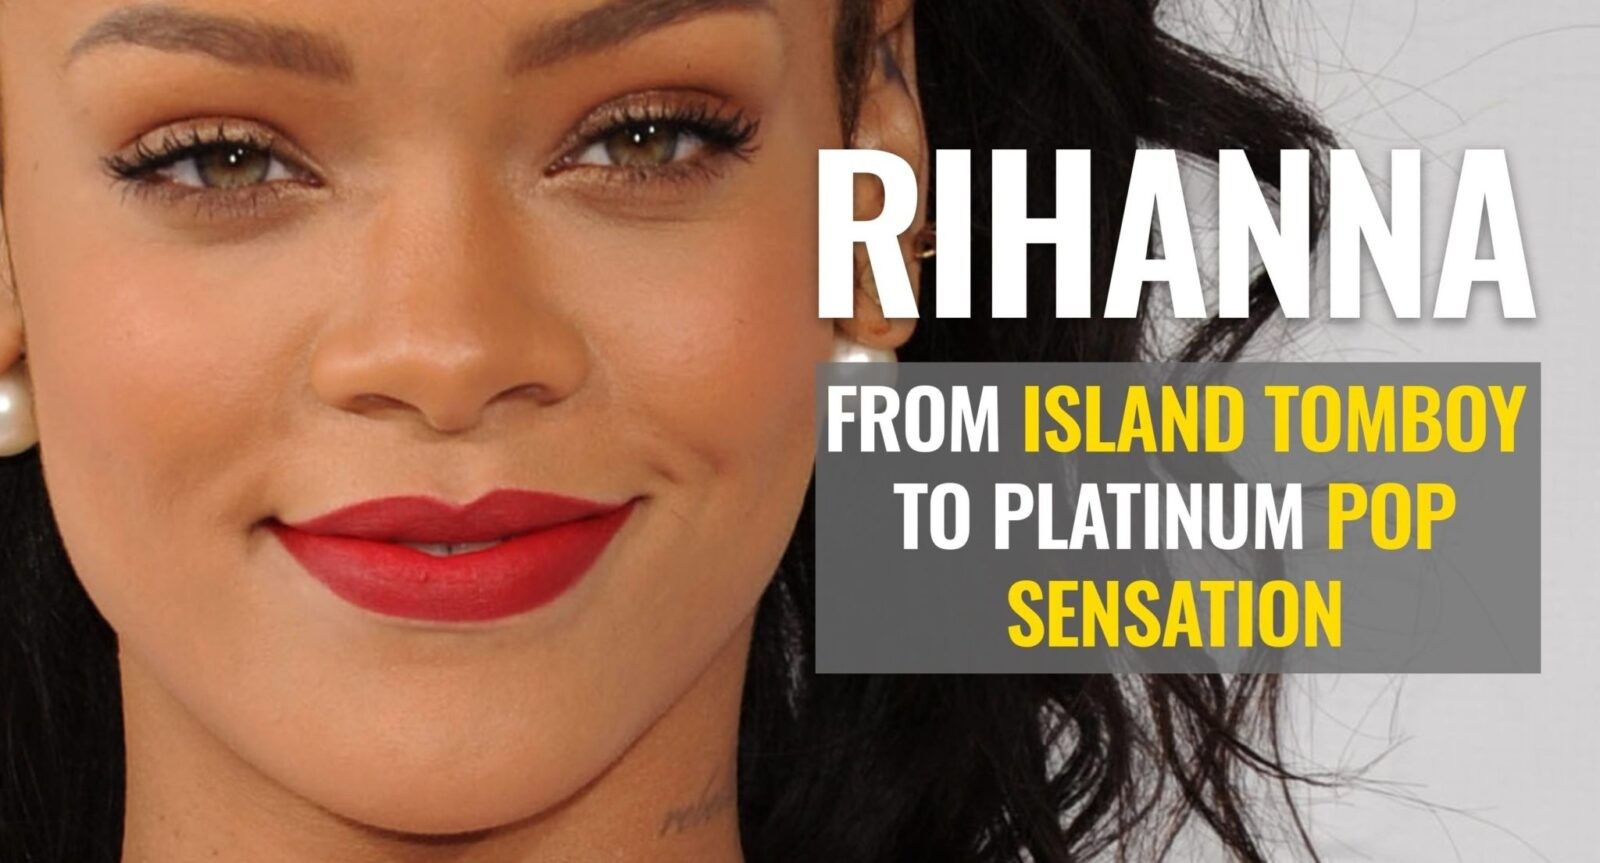 Rihanna’s Life Story: From Island Tomboy to Platinum Pop Sensation